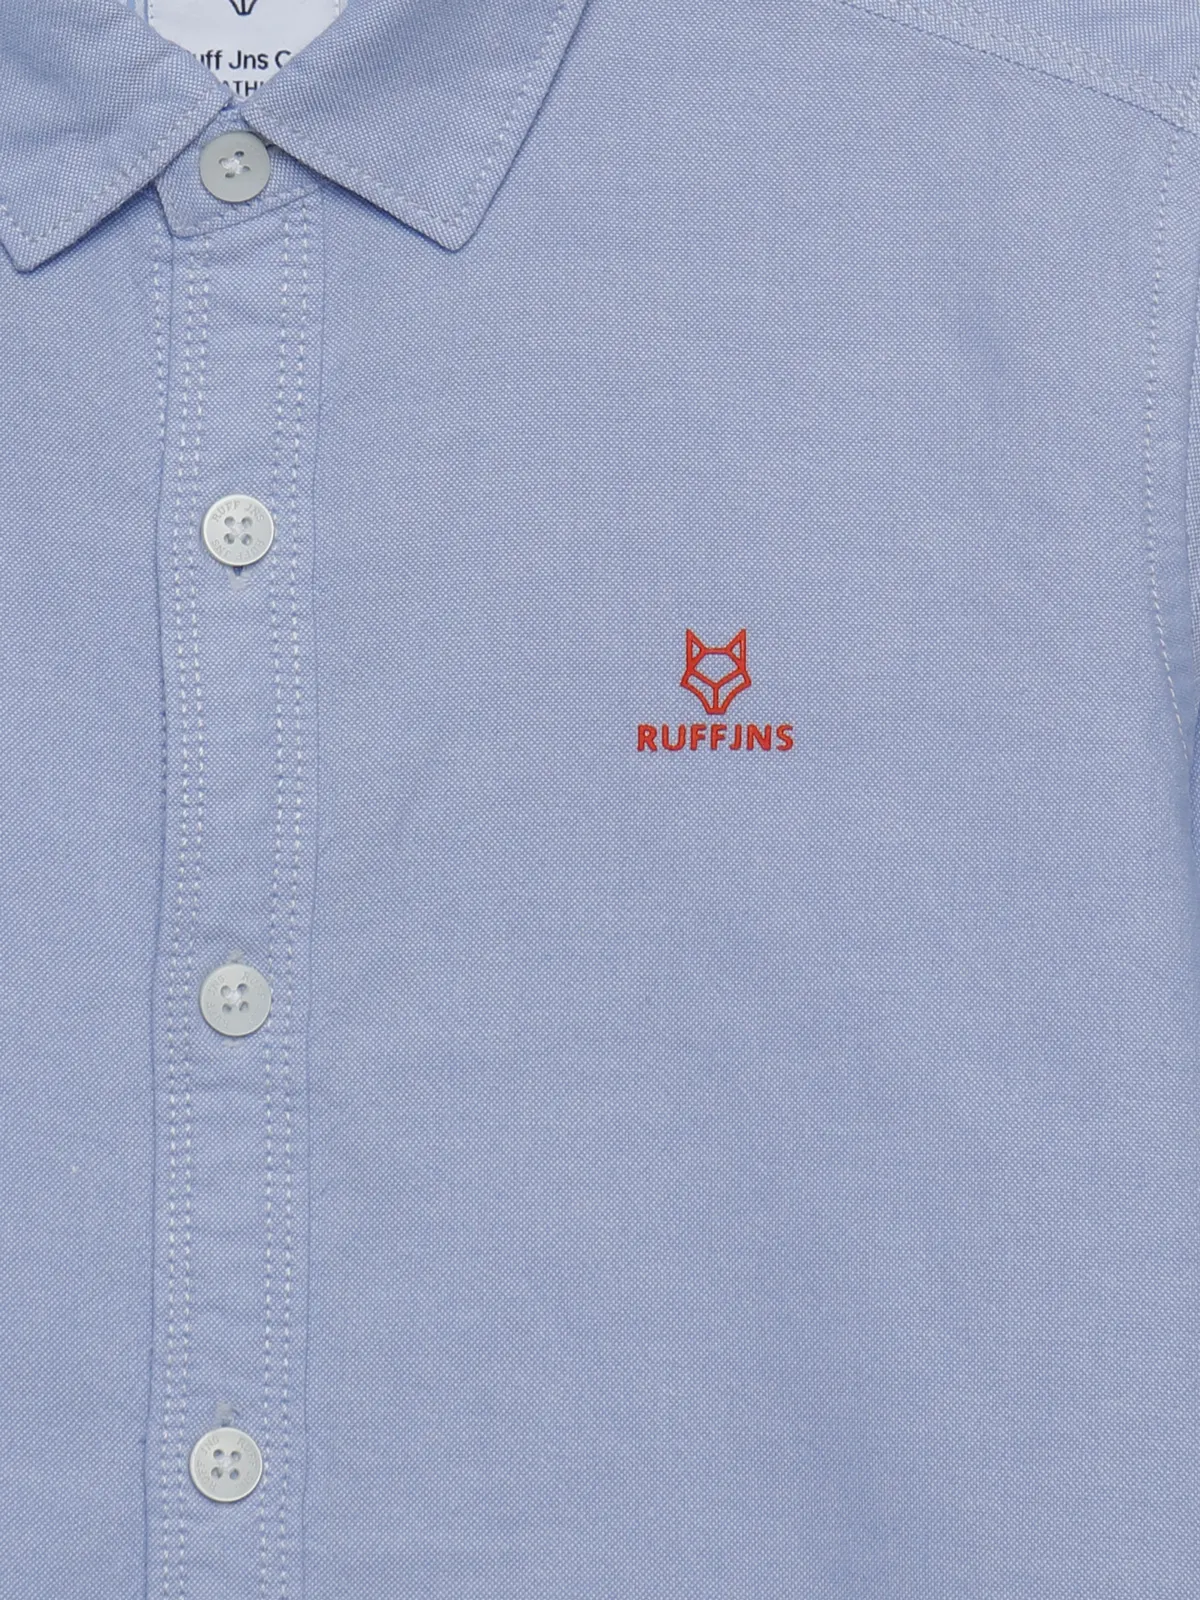 Ruff sky blue cotton plain shirt